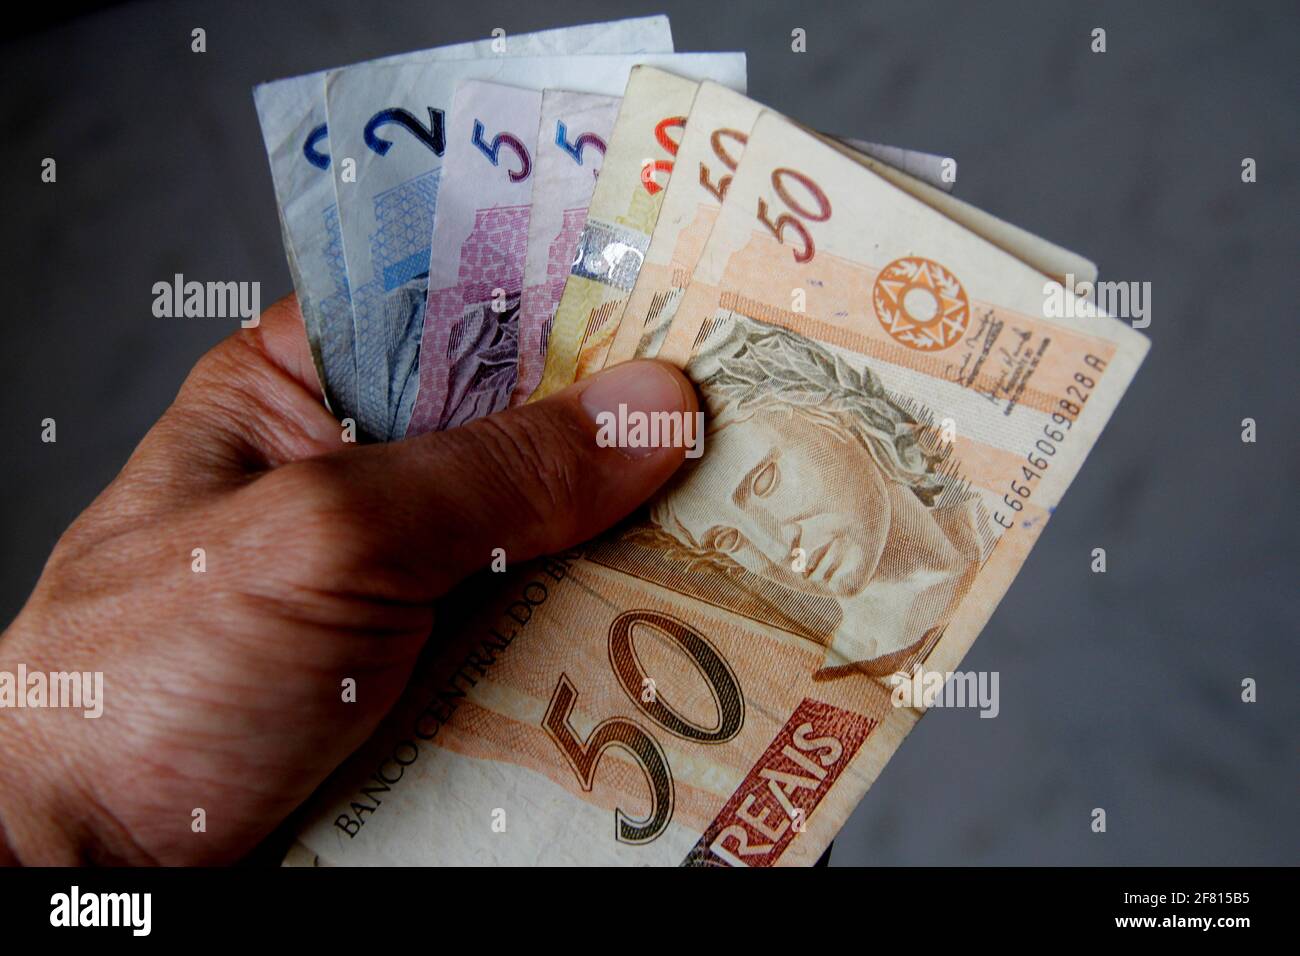 salvador, bahia / brasile - 19 gennaio 2013: Tenere a mano brasiliano banconote in valuta reale. *** Local Caption *** Foto Stock